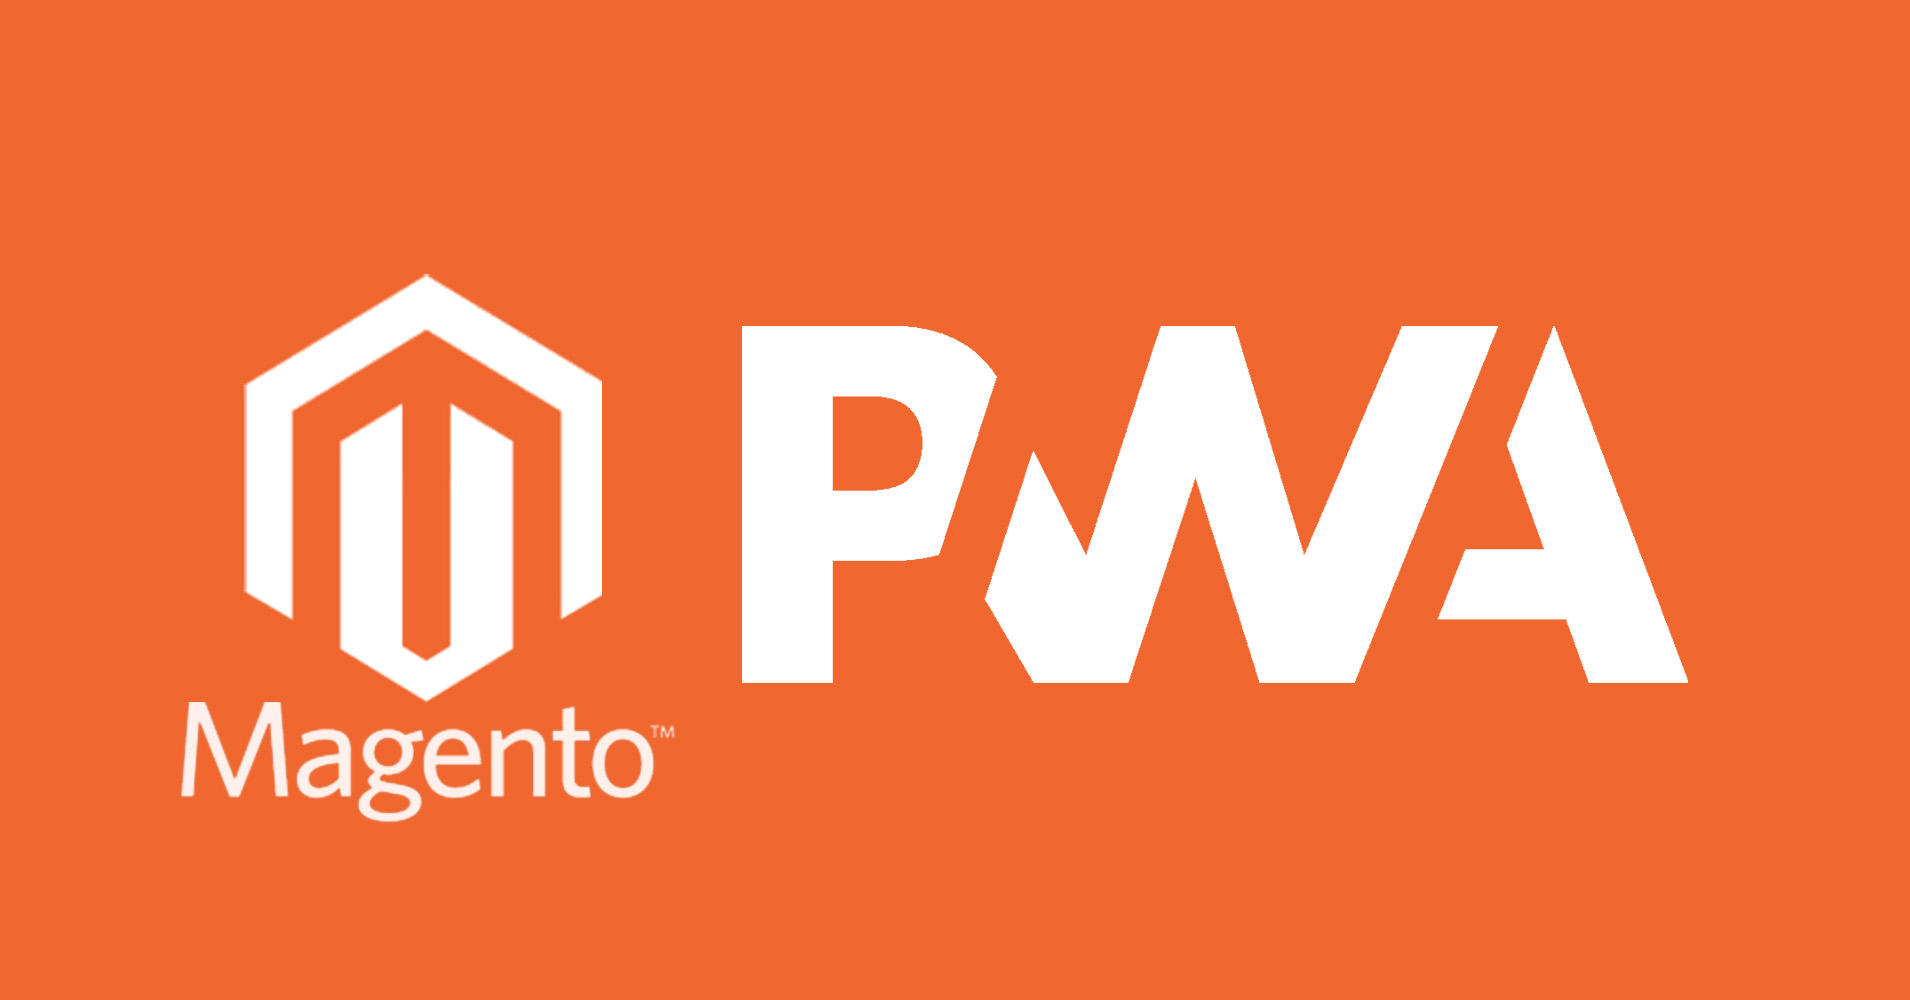 What is Magento PWA?